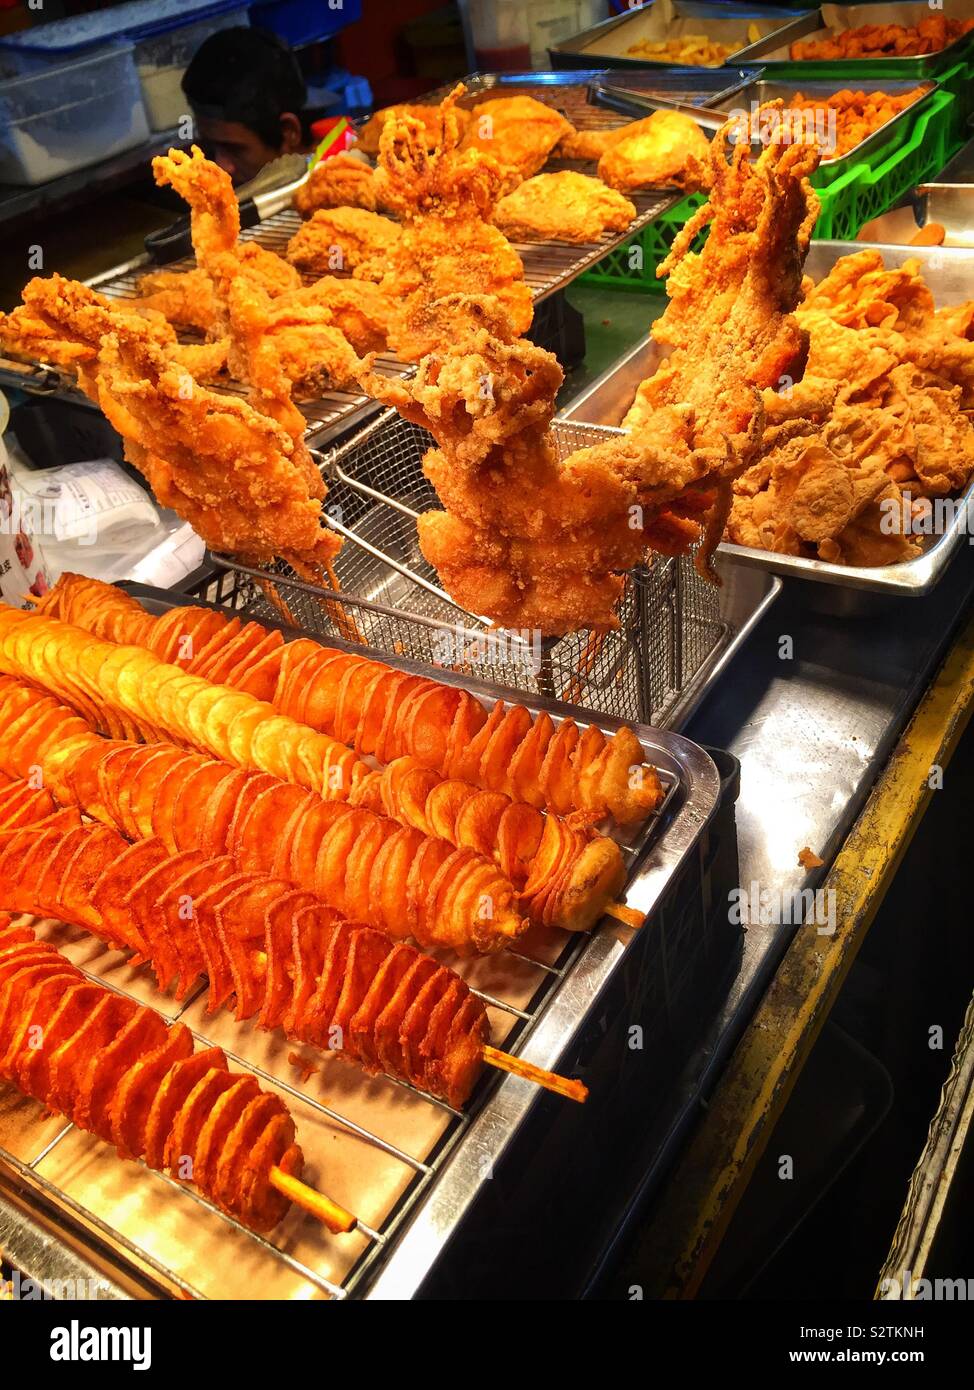 Assorted Indian-style fried foods for sale, Jalan Alor night food market, Kuala Lumpur, Malaysia Stock Photo